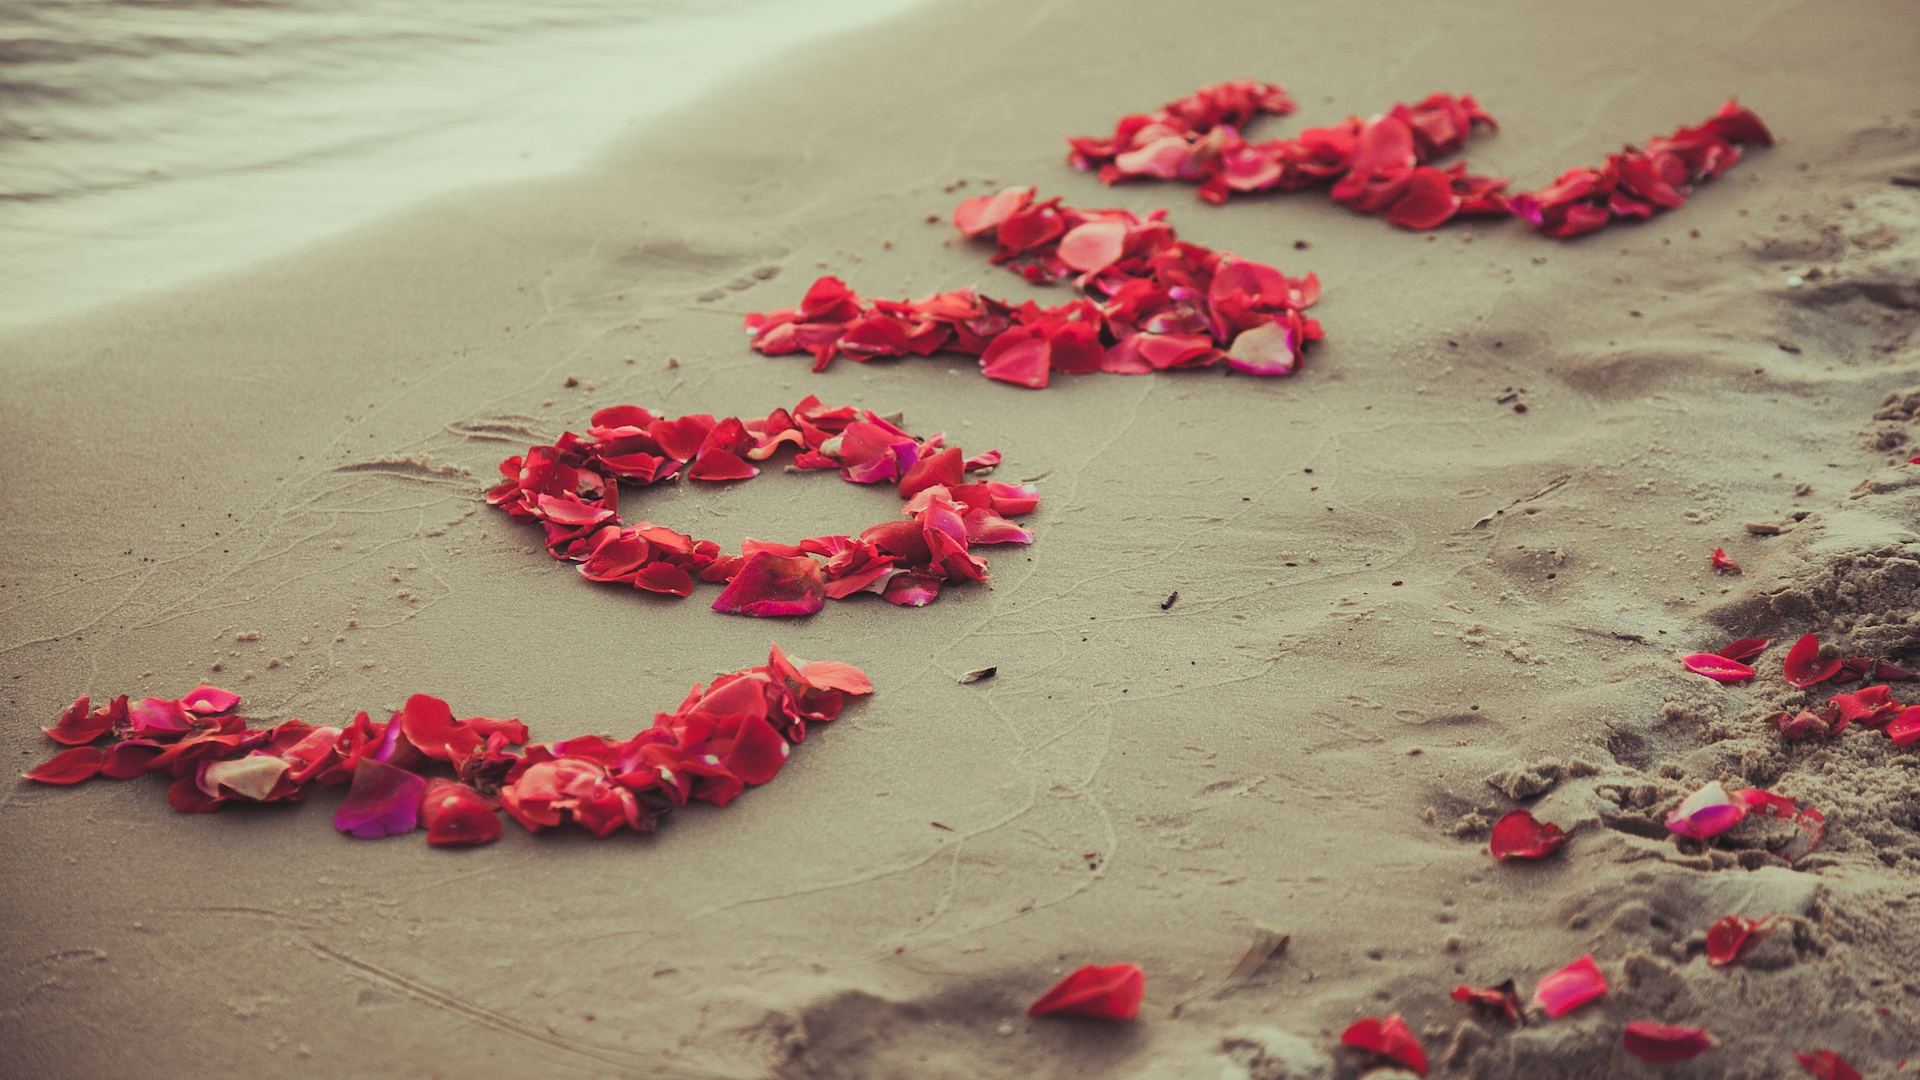 Everlasting Love - Love petals at a beach wedding